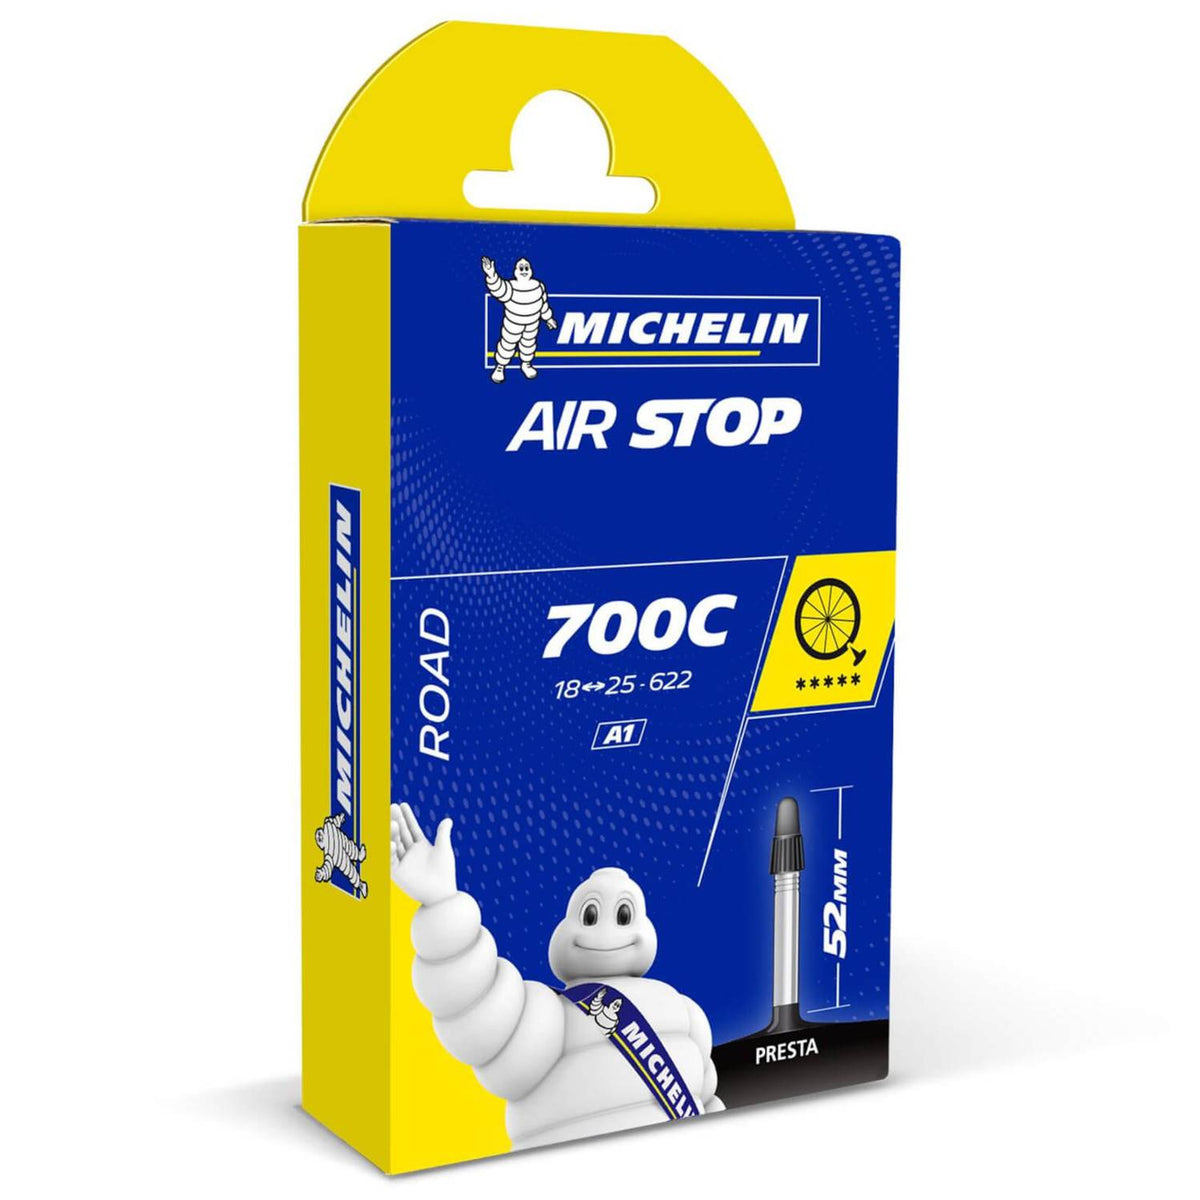 Michelin Air Stop 700c x 18-25 Road Inner Tube